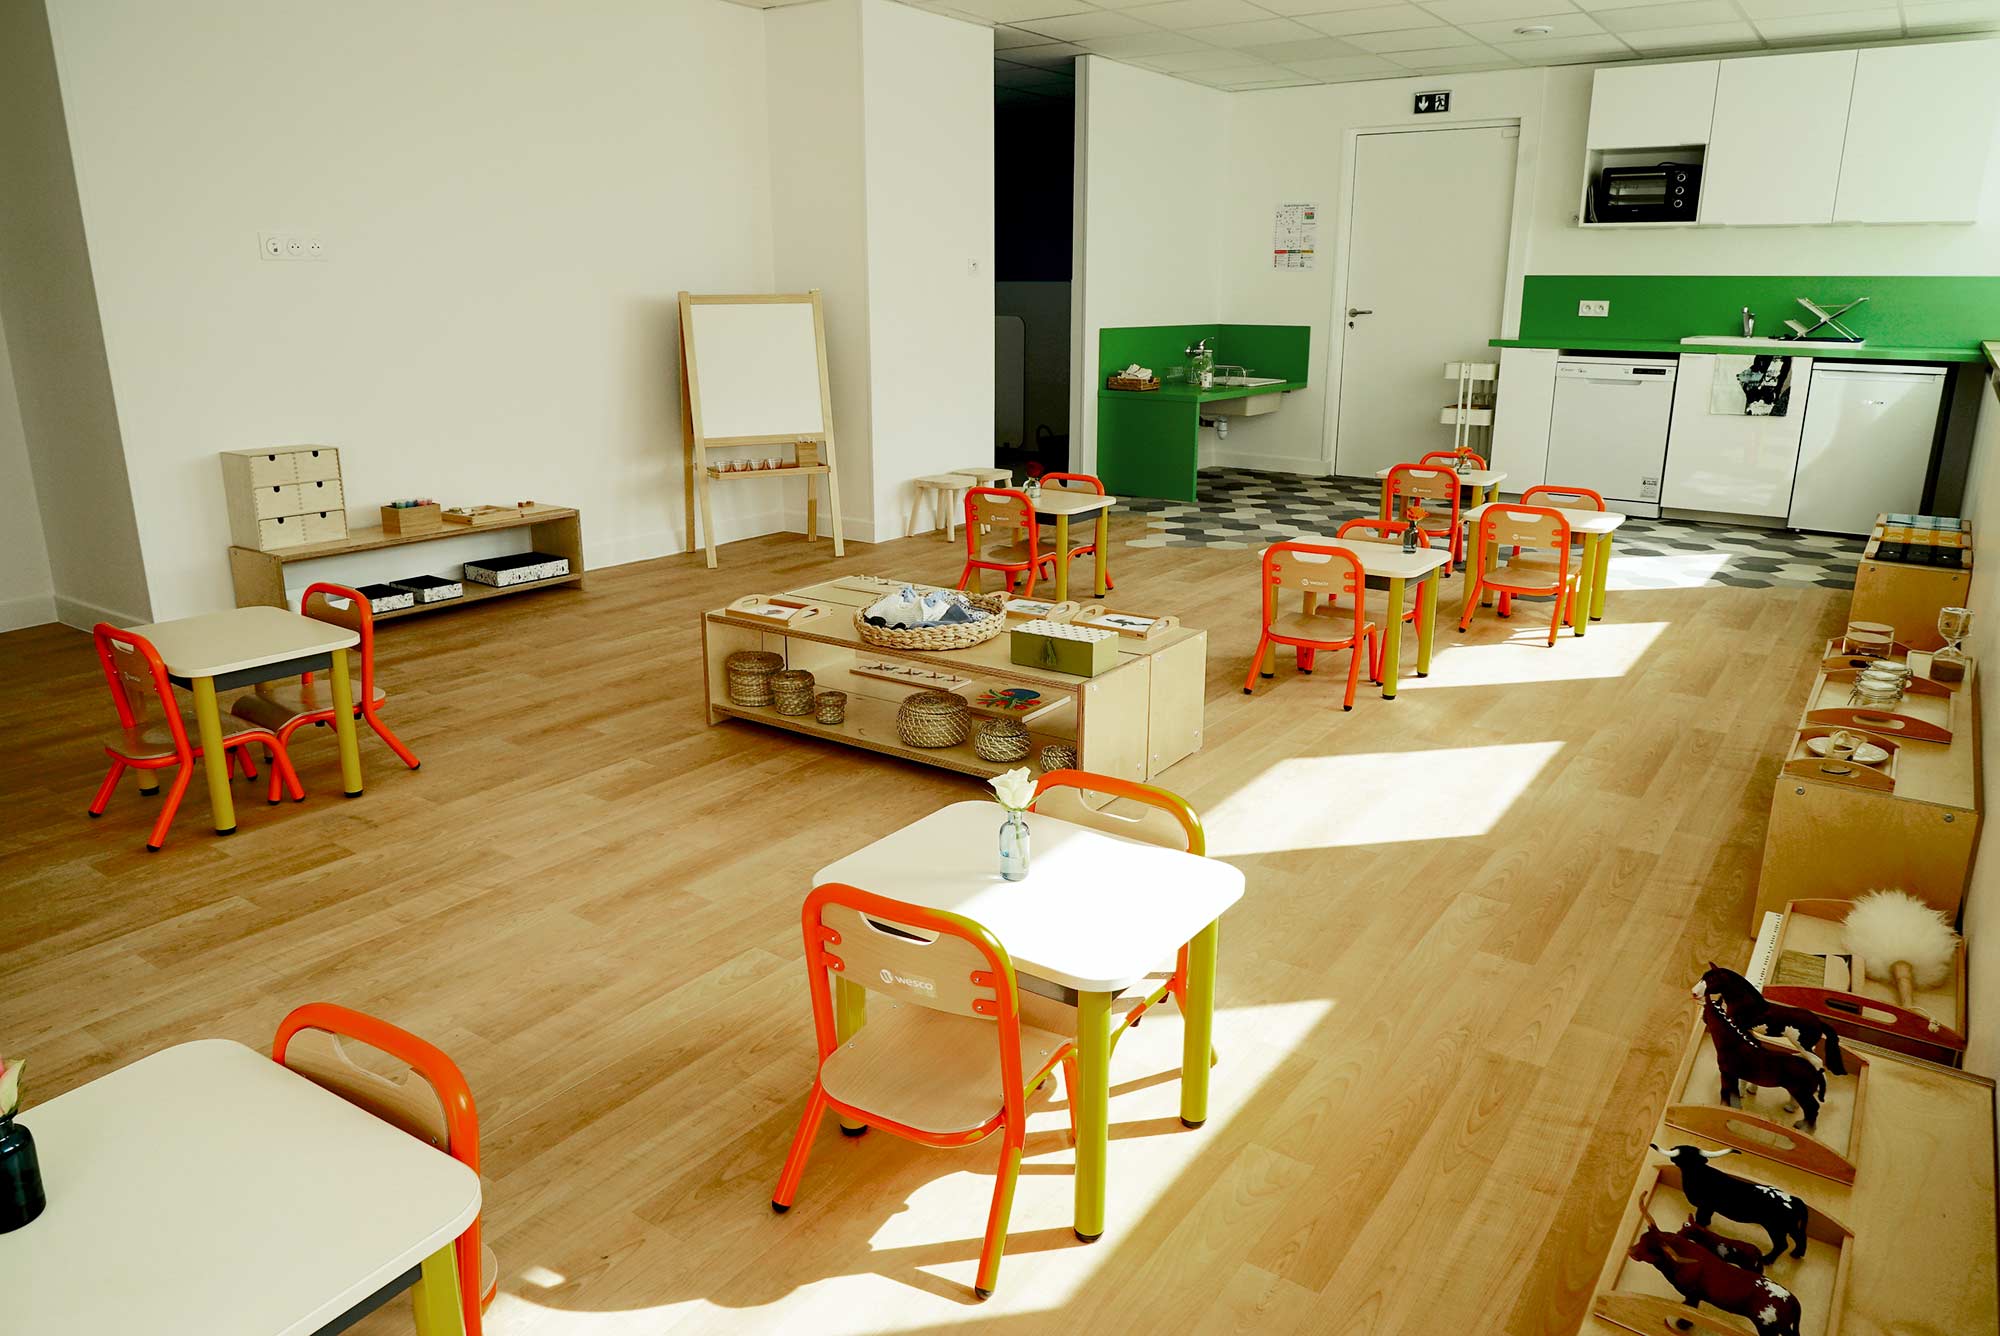 EMBL - Ecole maternelle Montessori bilingue - Levallois